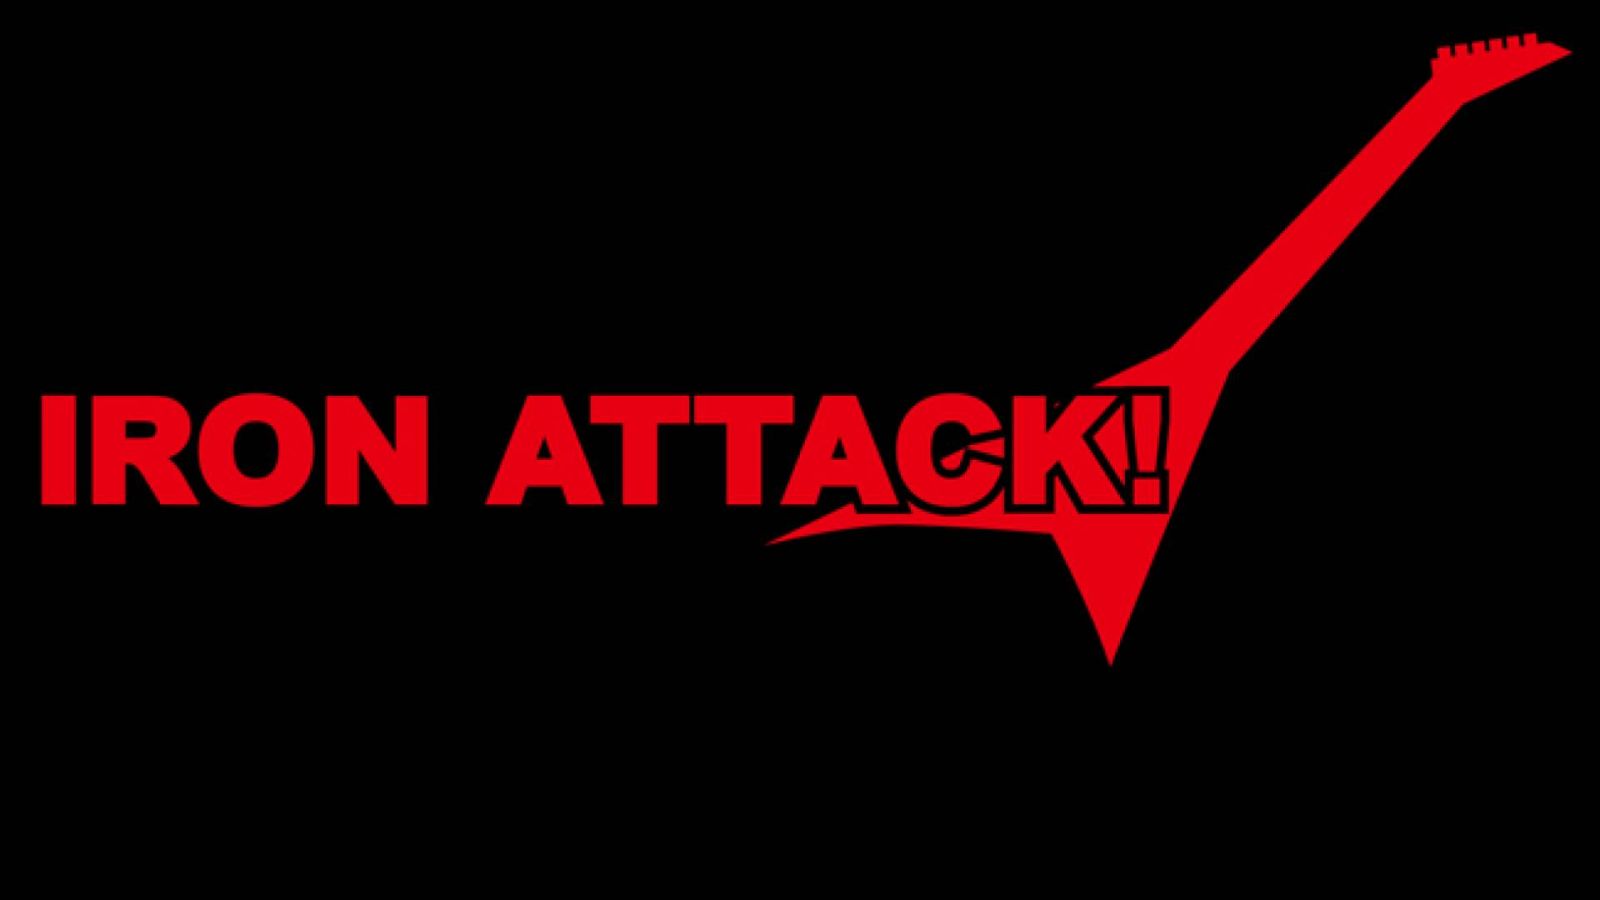 IRON ATTACK! – Dim.STARLIGHT © 2015 IRON ATTACK! All rights reserved.